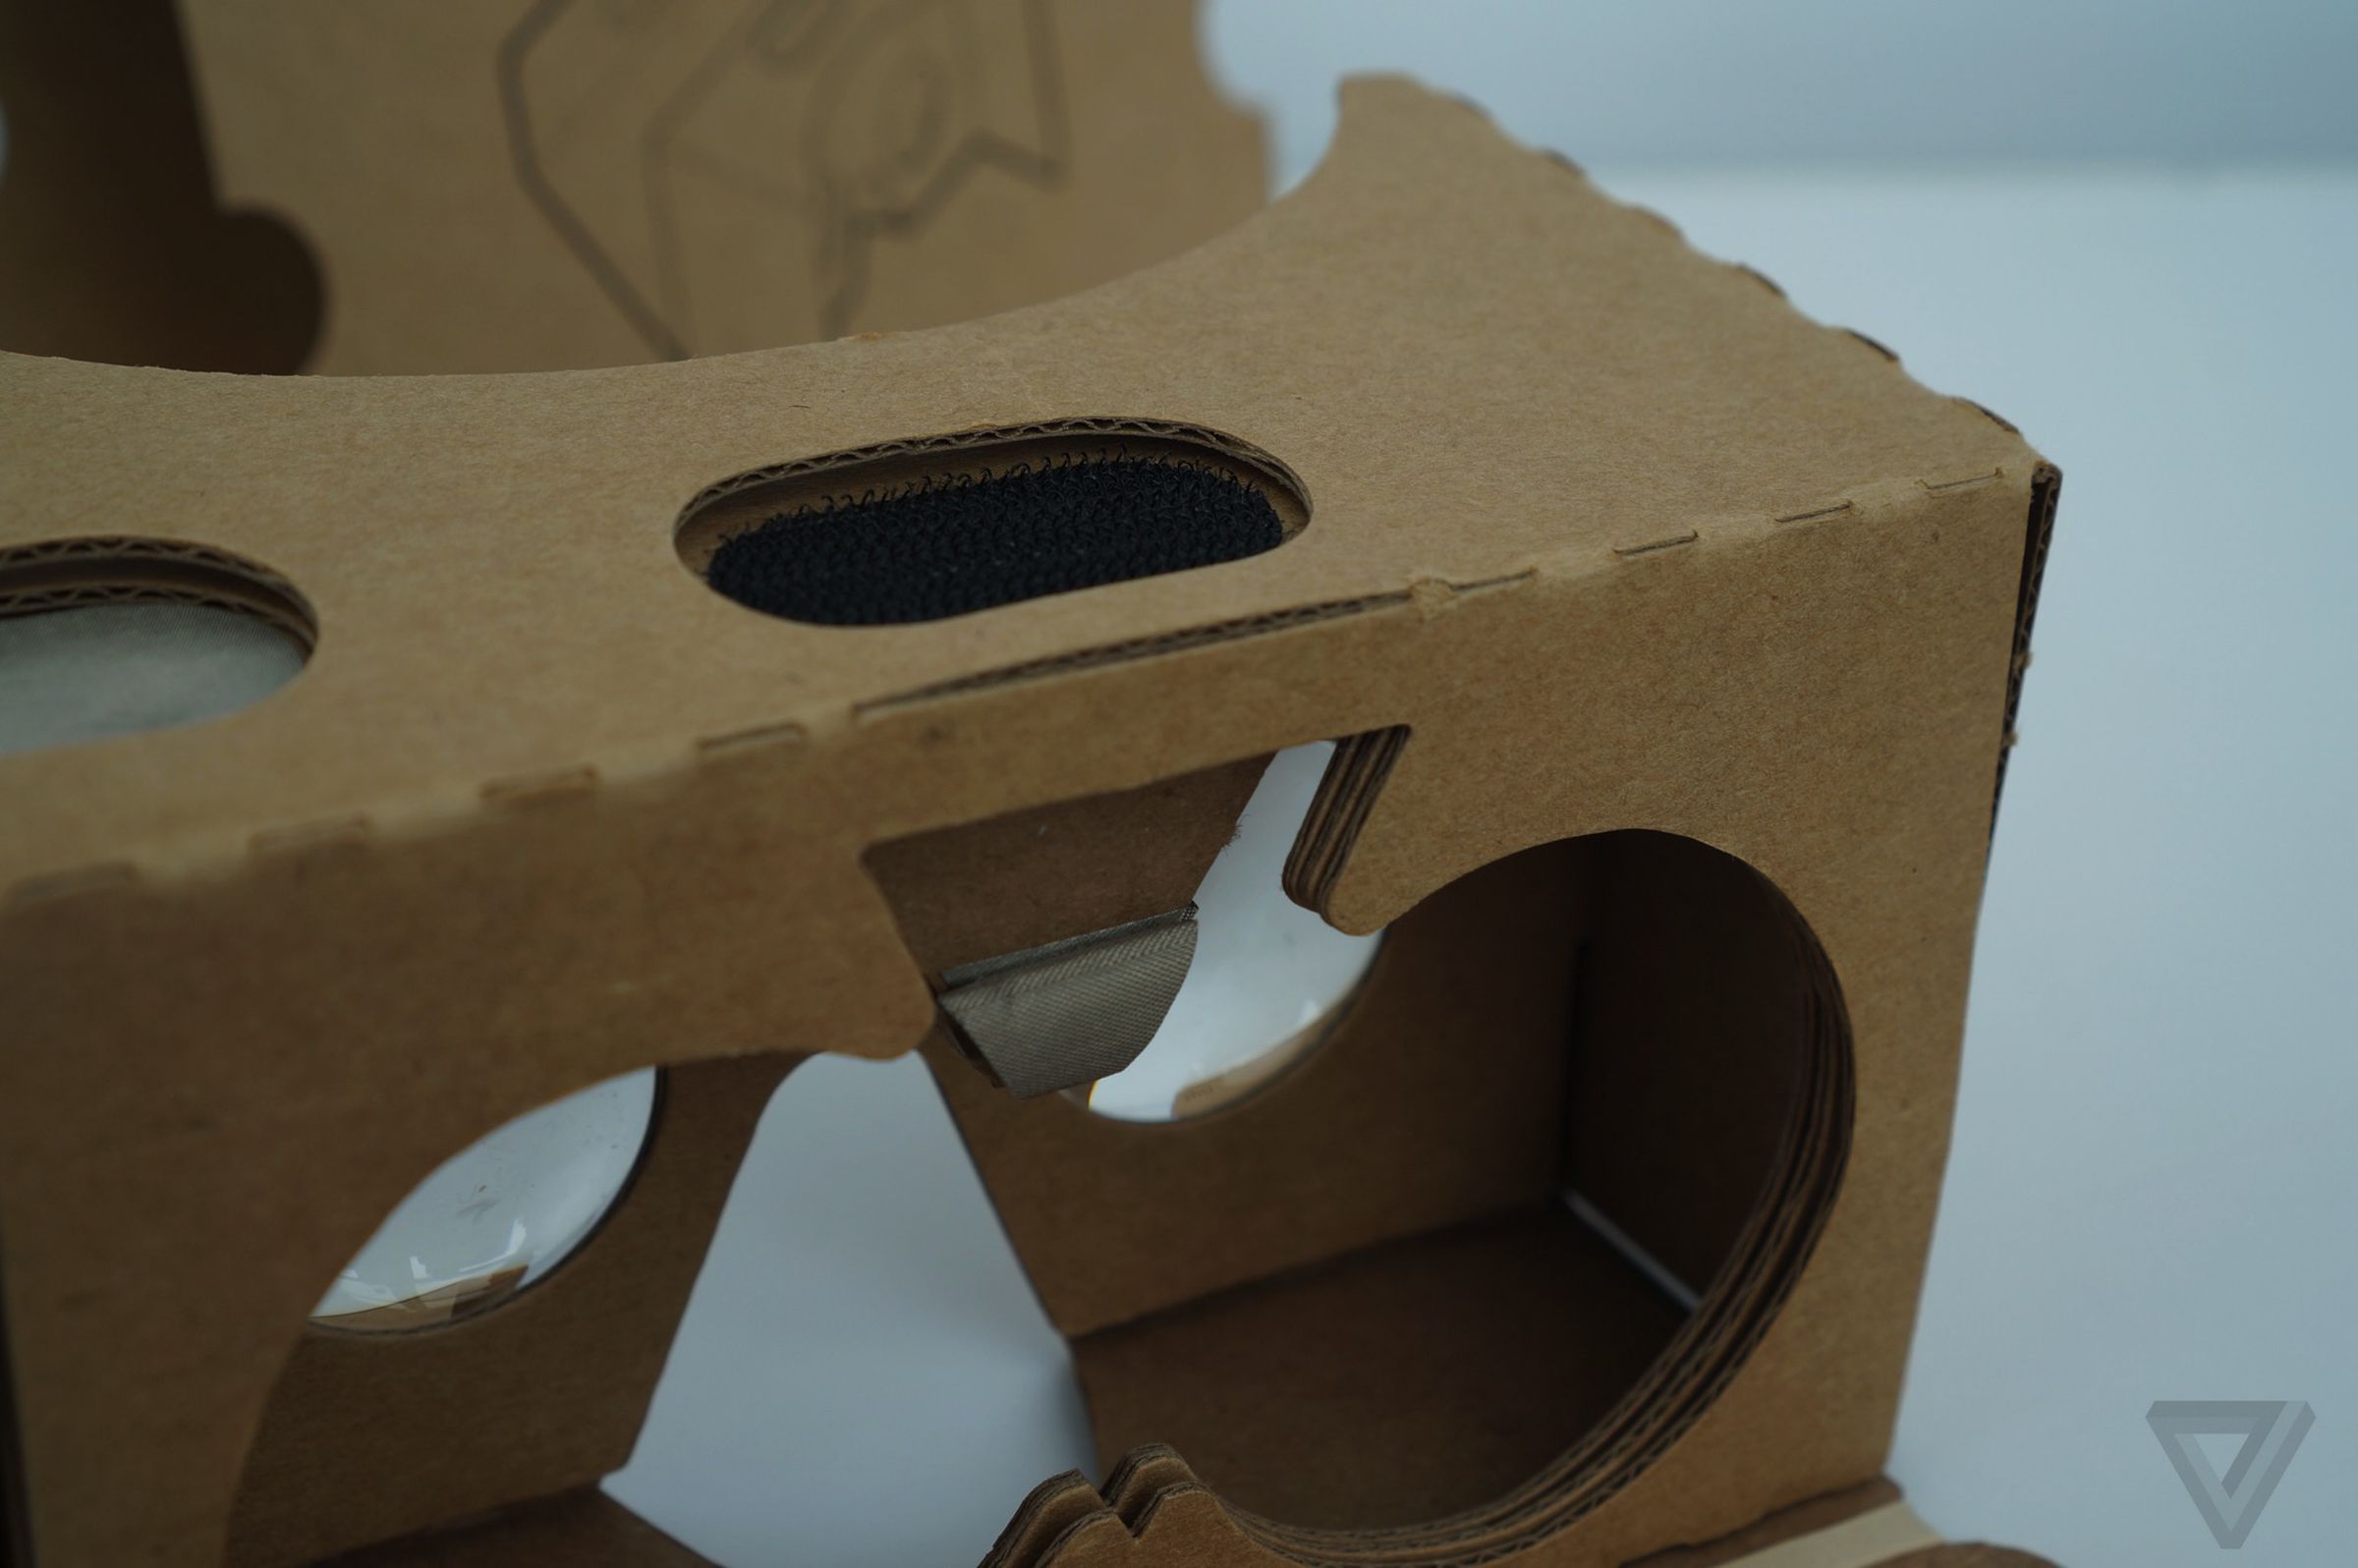 Google's new Cardboard hardware